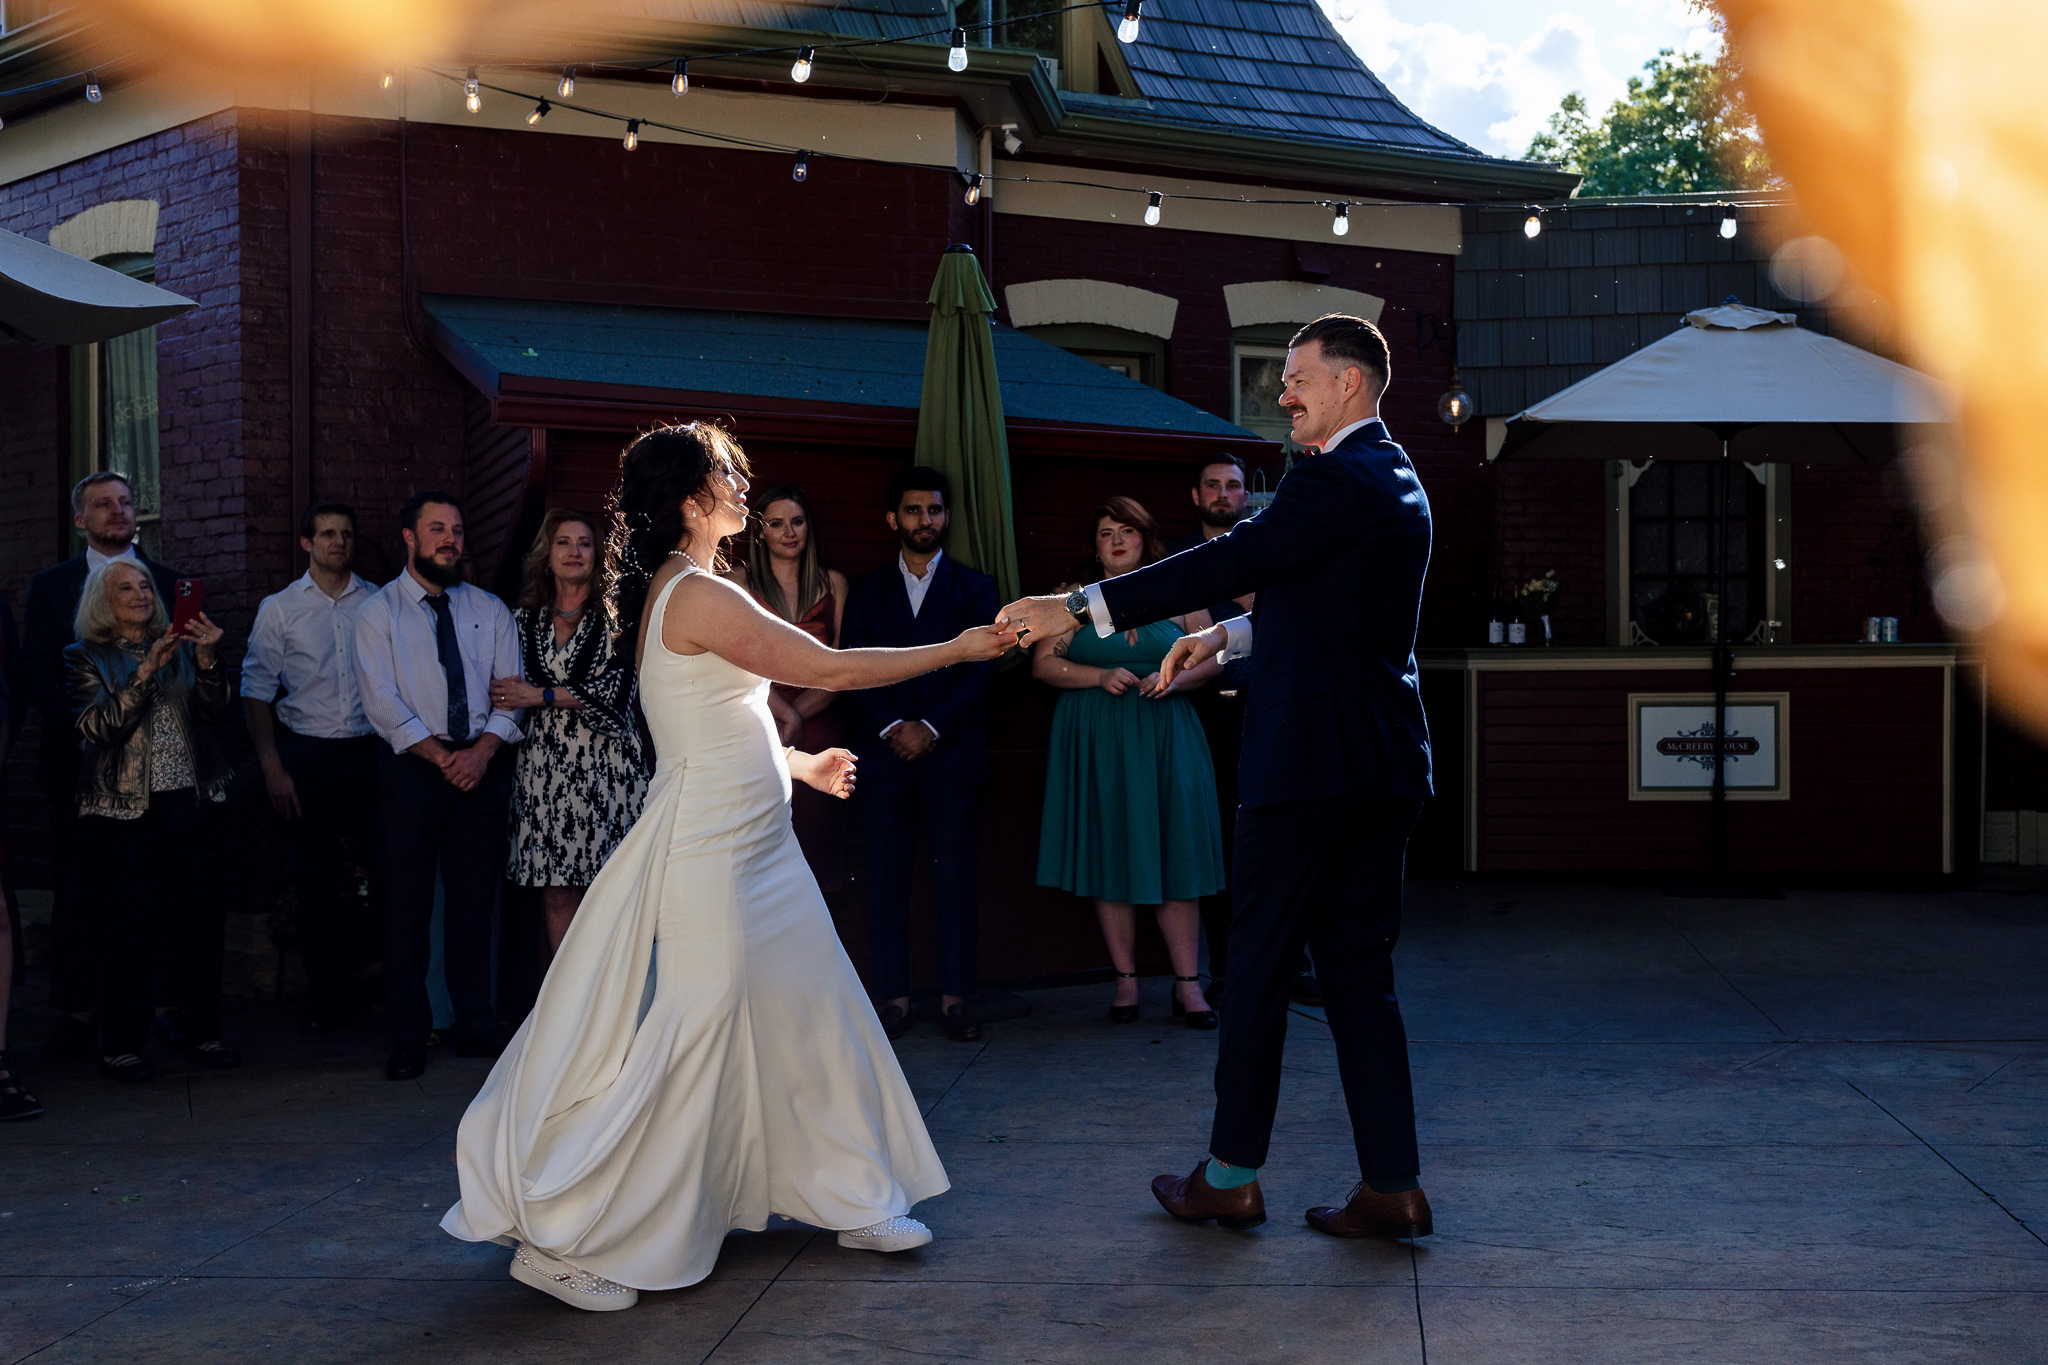 Bride & Groom's First Dance for Haley & Gytenis' Summer Wedding at The McCreery House by Colorado Wedding Photographer, Jennifer Garza.